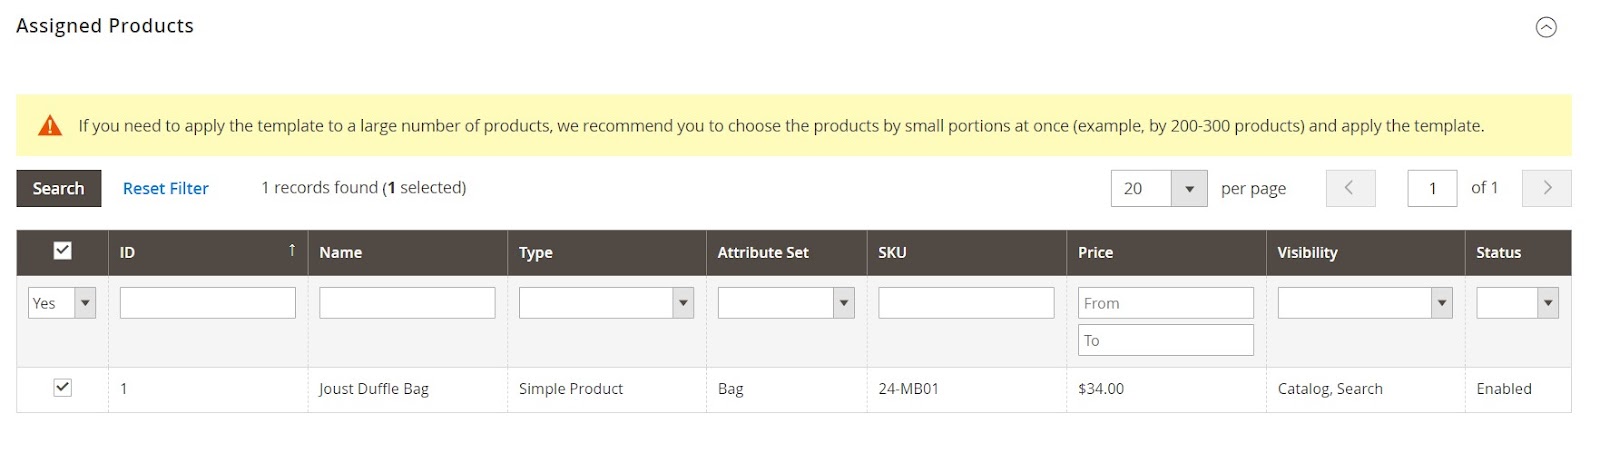 Custom Product Options Templates in Magento 2 | MageWorx Blog